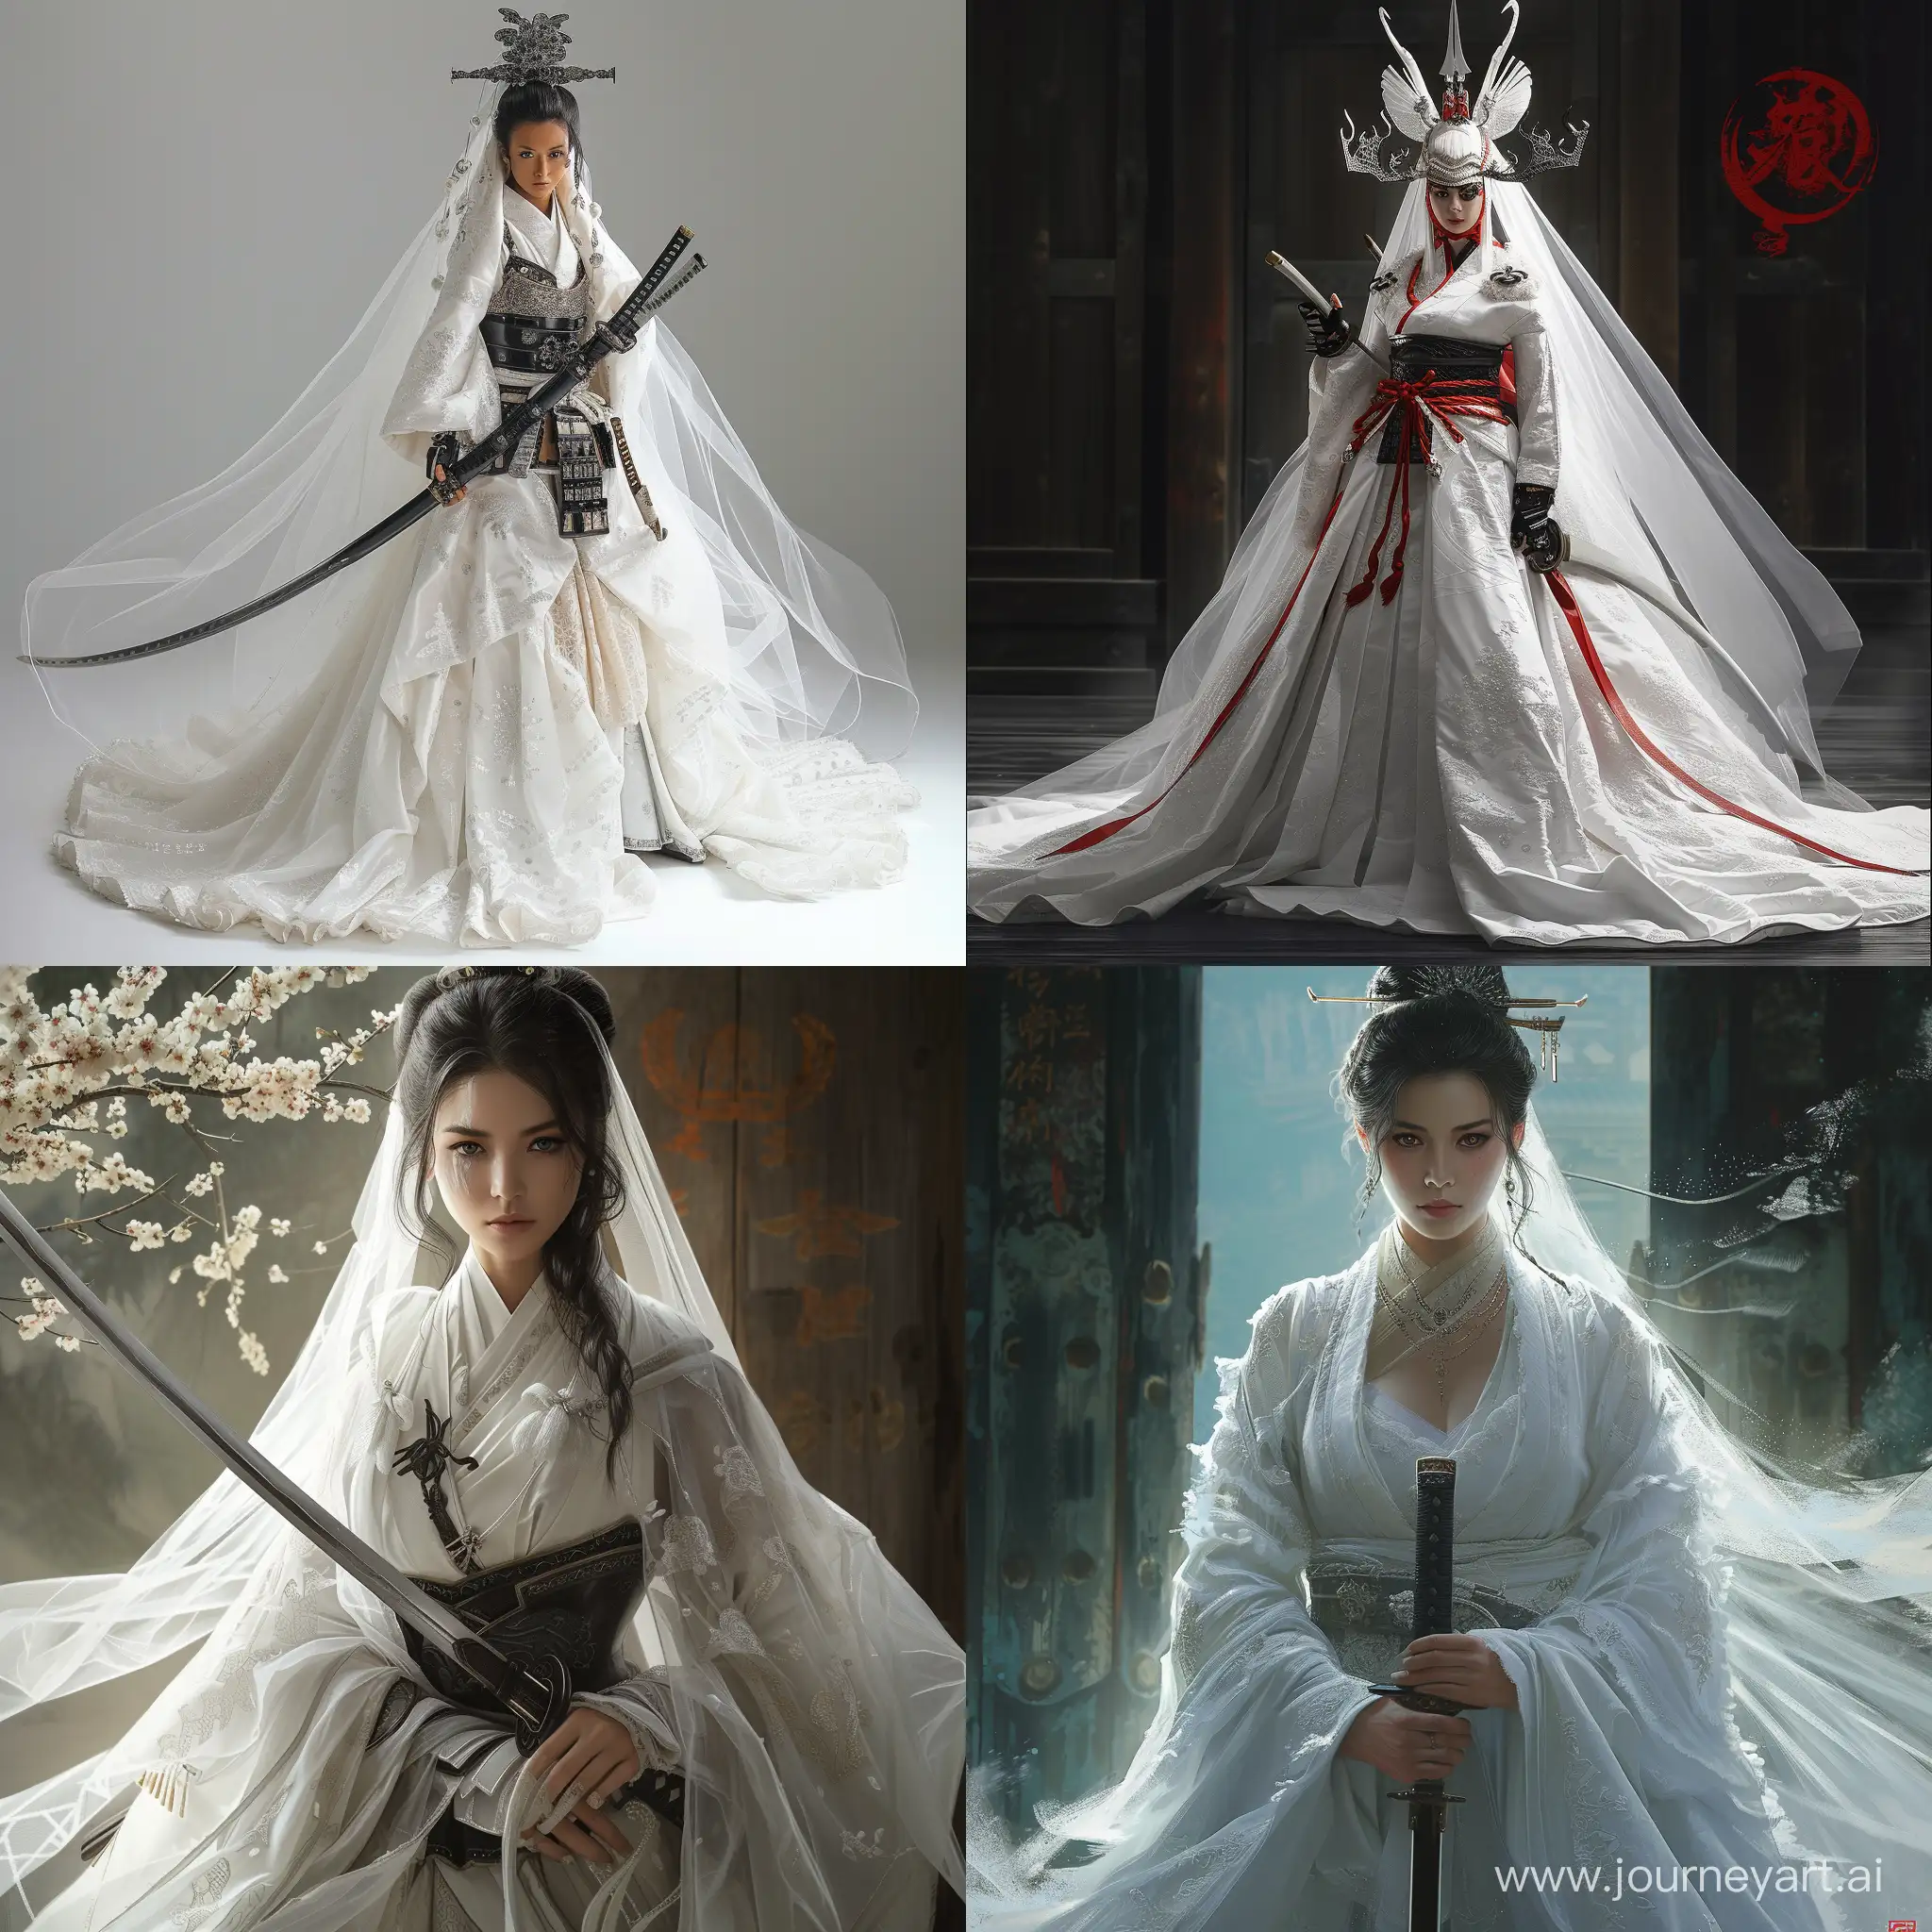 raiden shogun with a pure white wedding dress